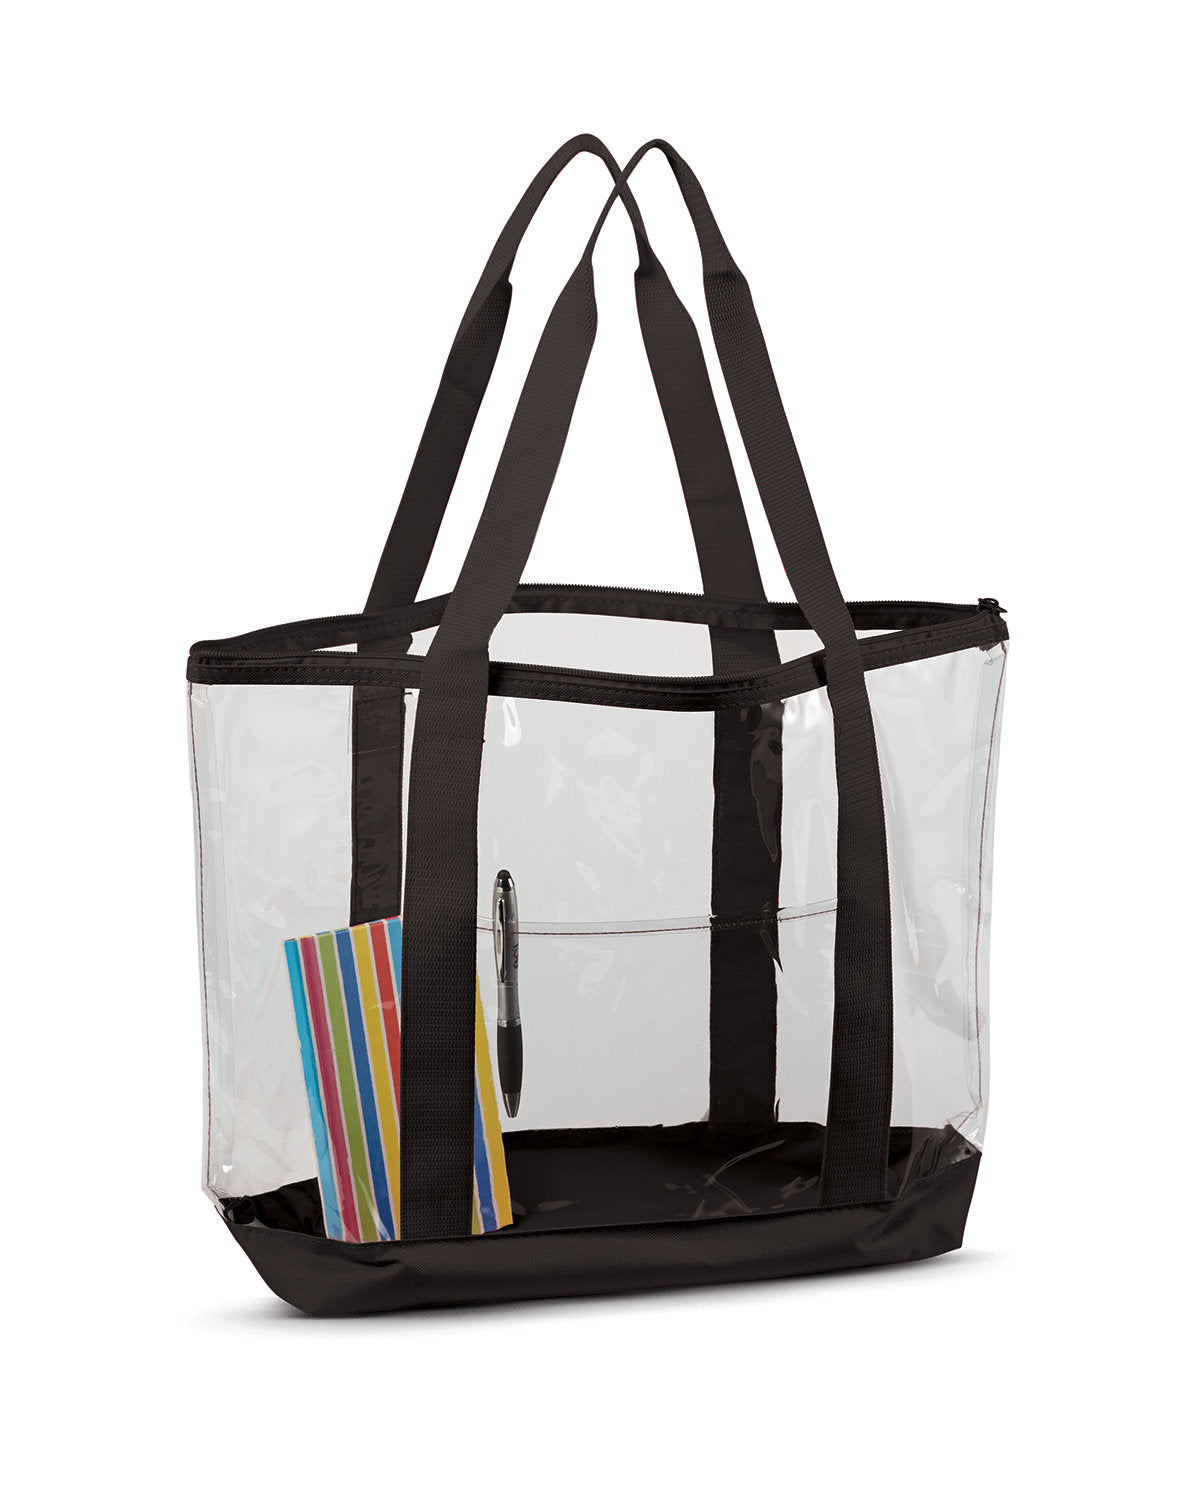 Liberty Bags 9009 - Garment Bag